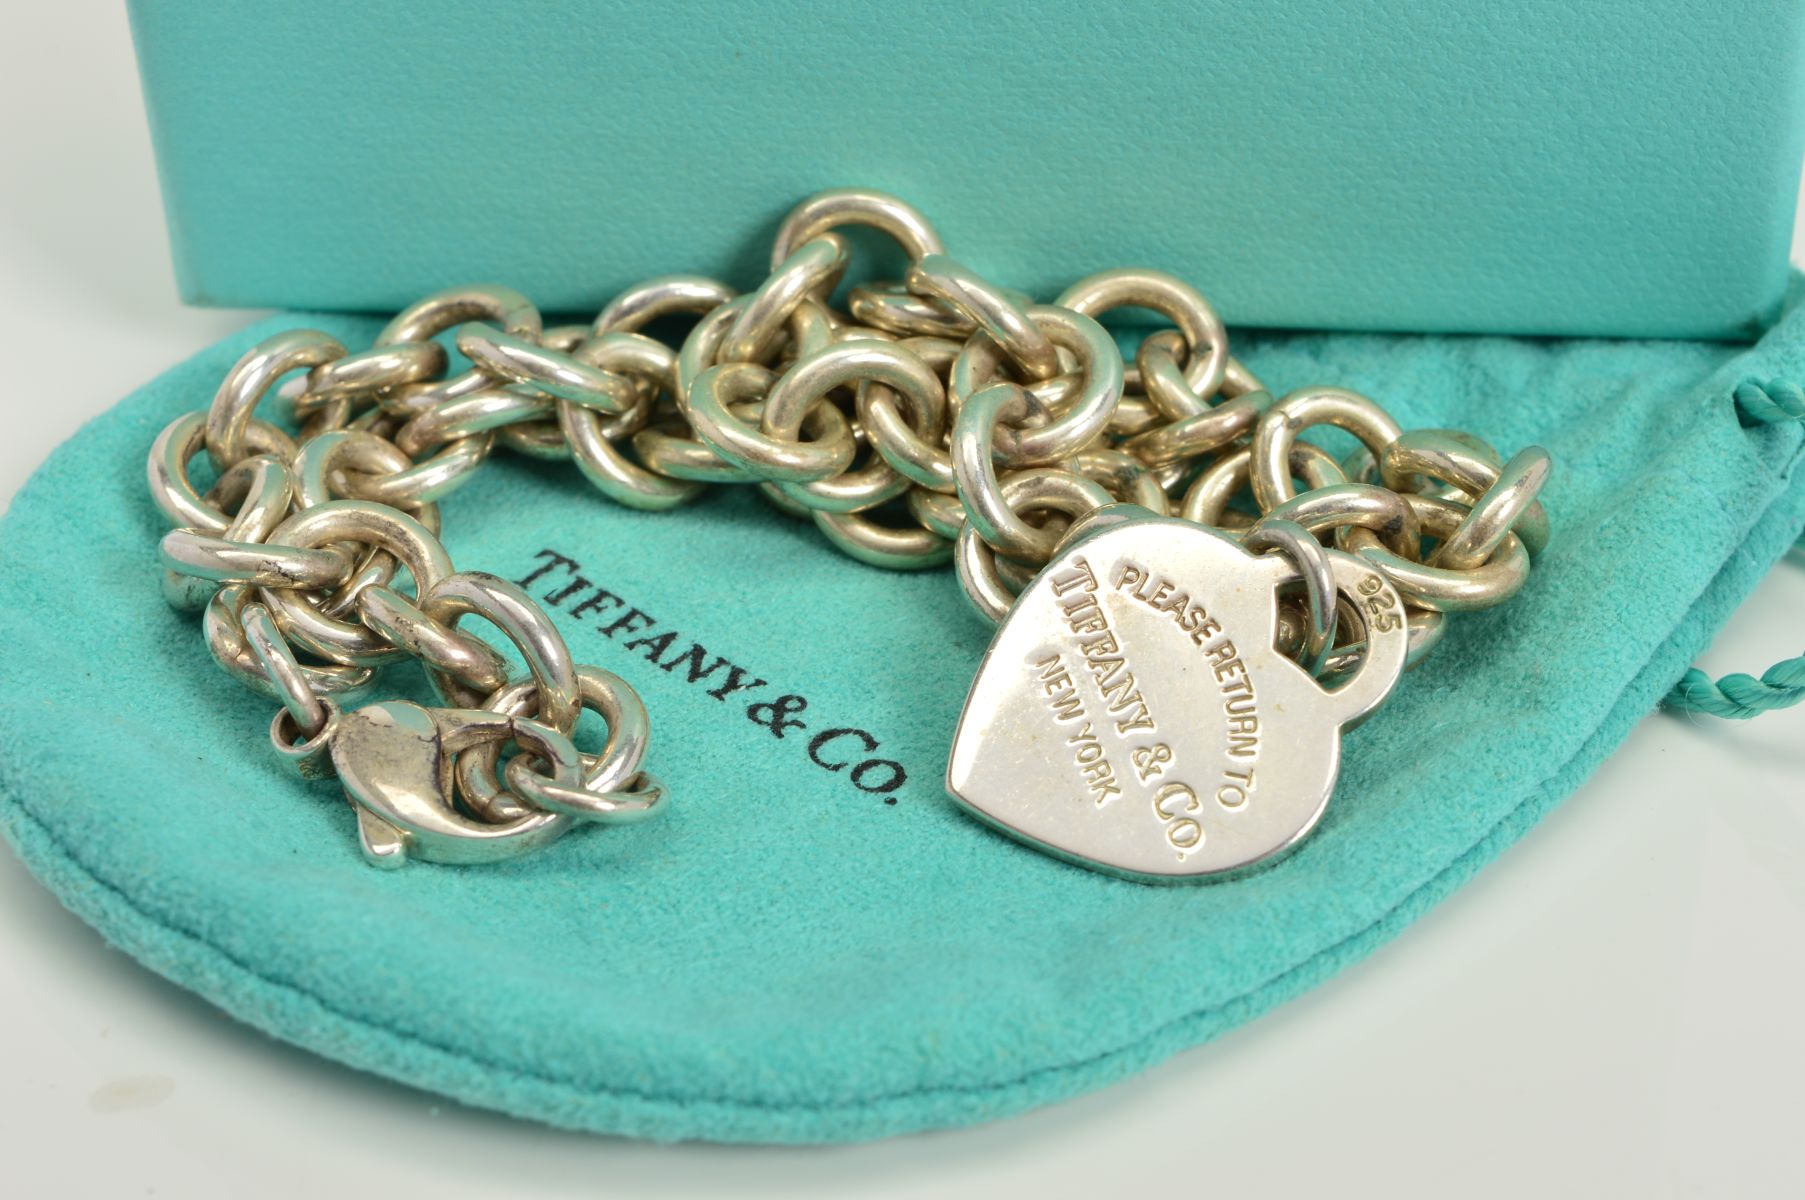 A TIFFANY & CO NECKLACE, designed as a belcher link chain suspending a heart shape pendant